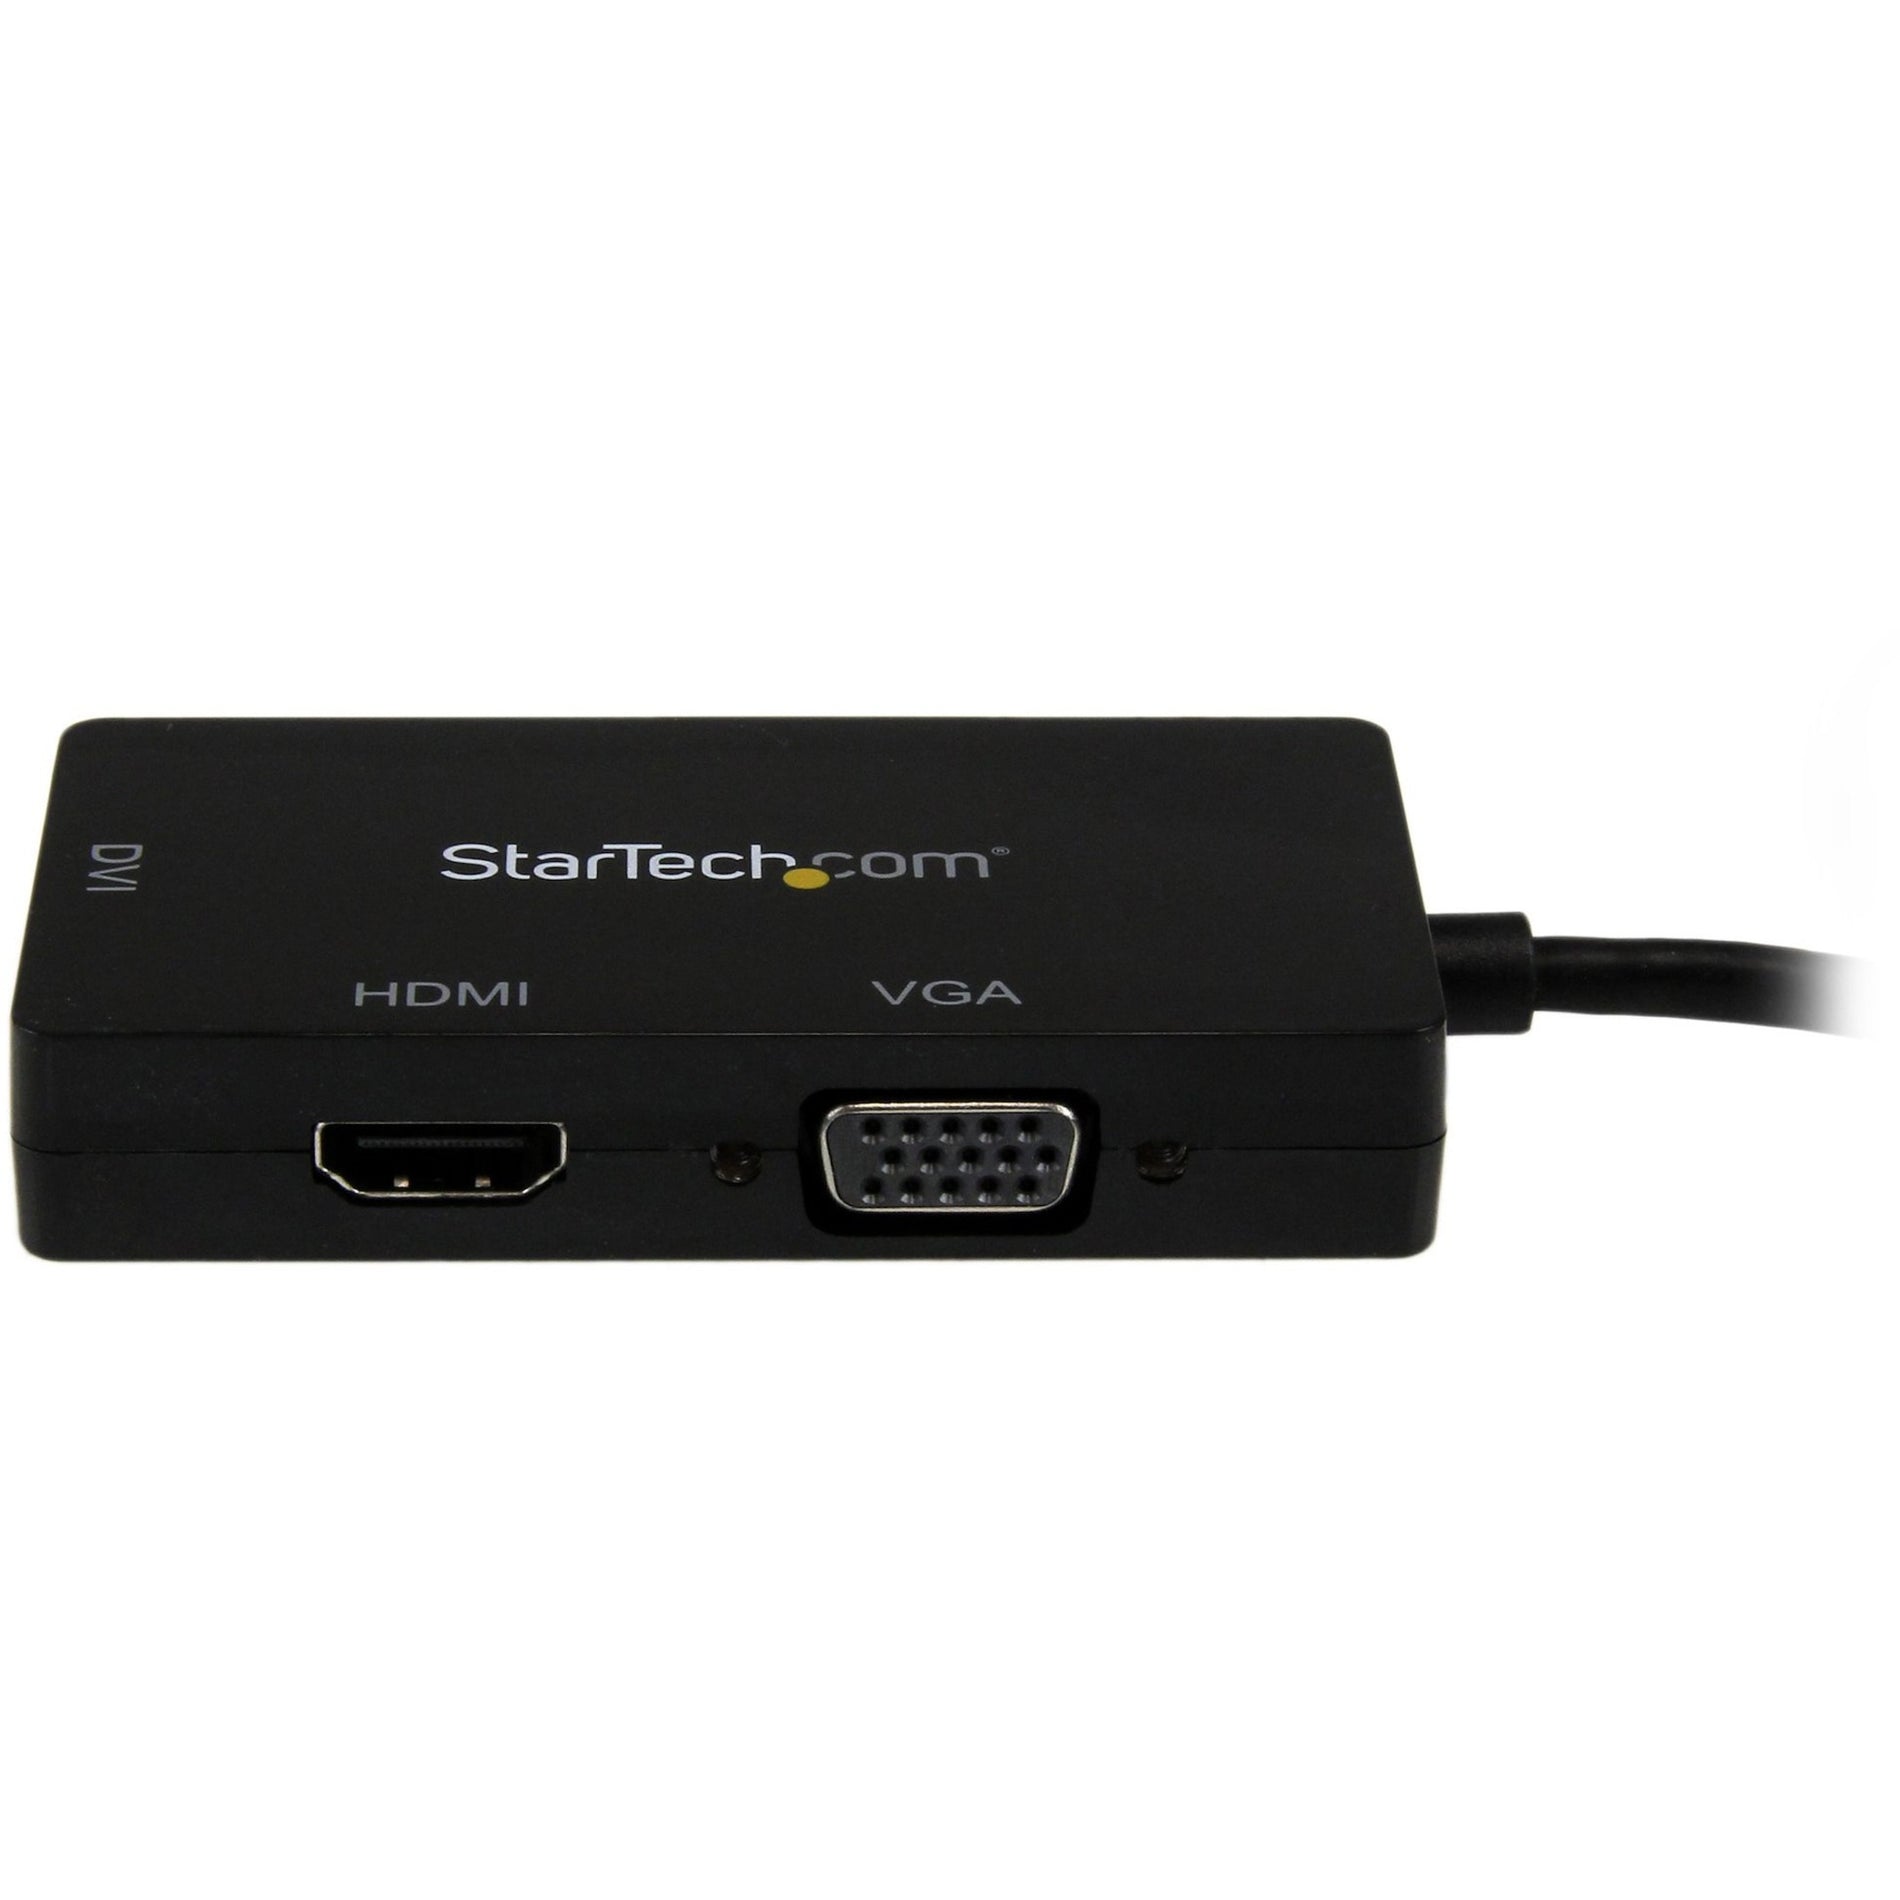 StarTech.com MDP2VGDVHD Mini DisplayPort to VGA DVI HDMI Adapter, 3-in-1 mDP Converter